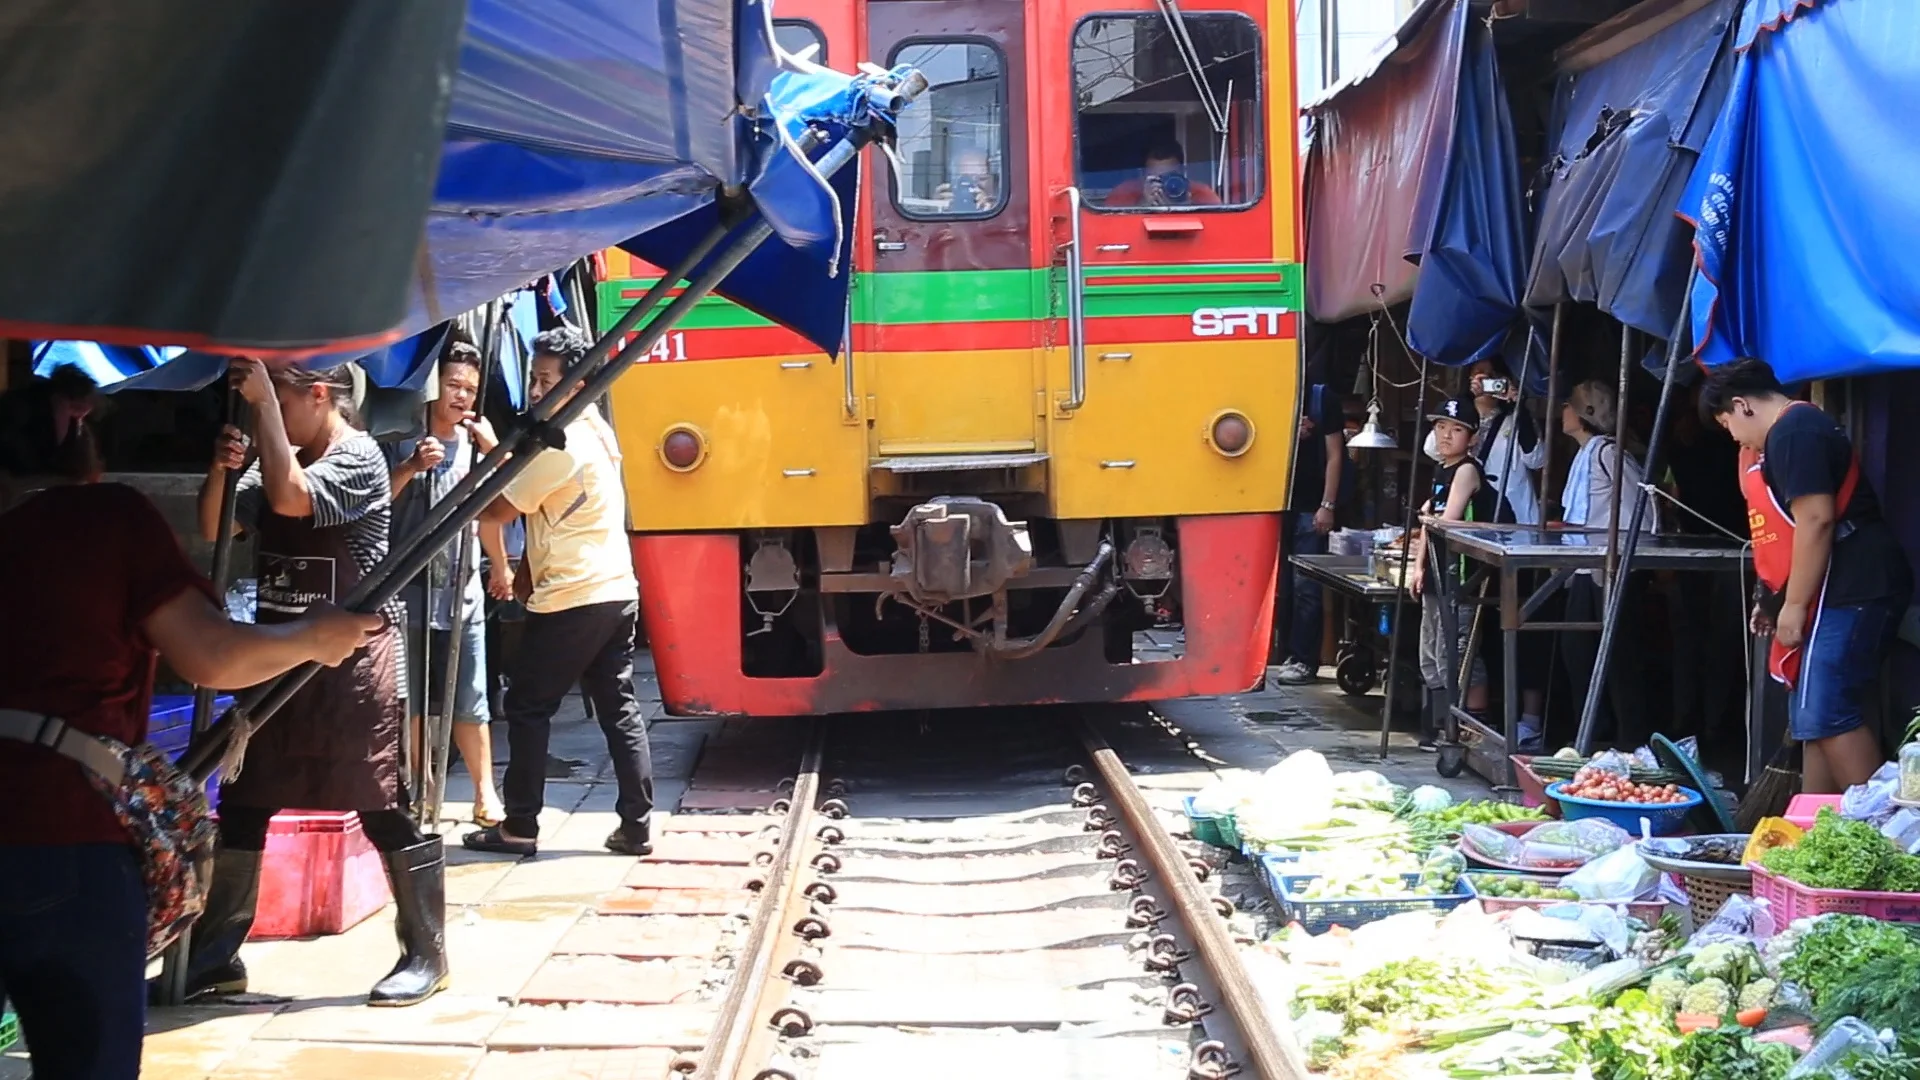 Mae Klong Railway Market (Hoop Rom Market)